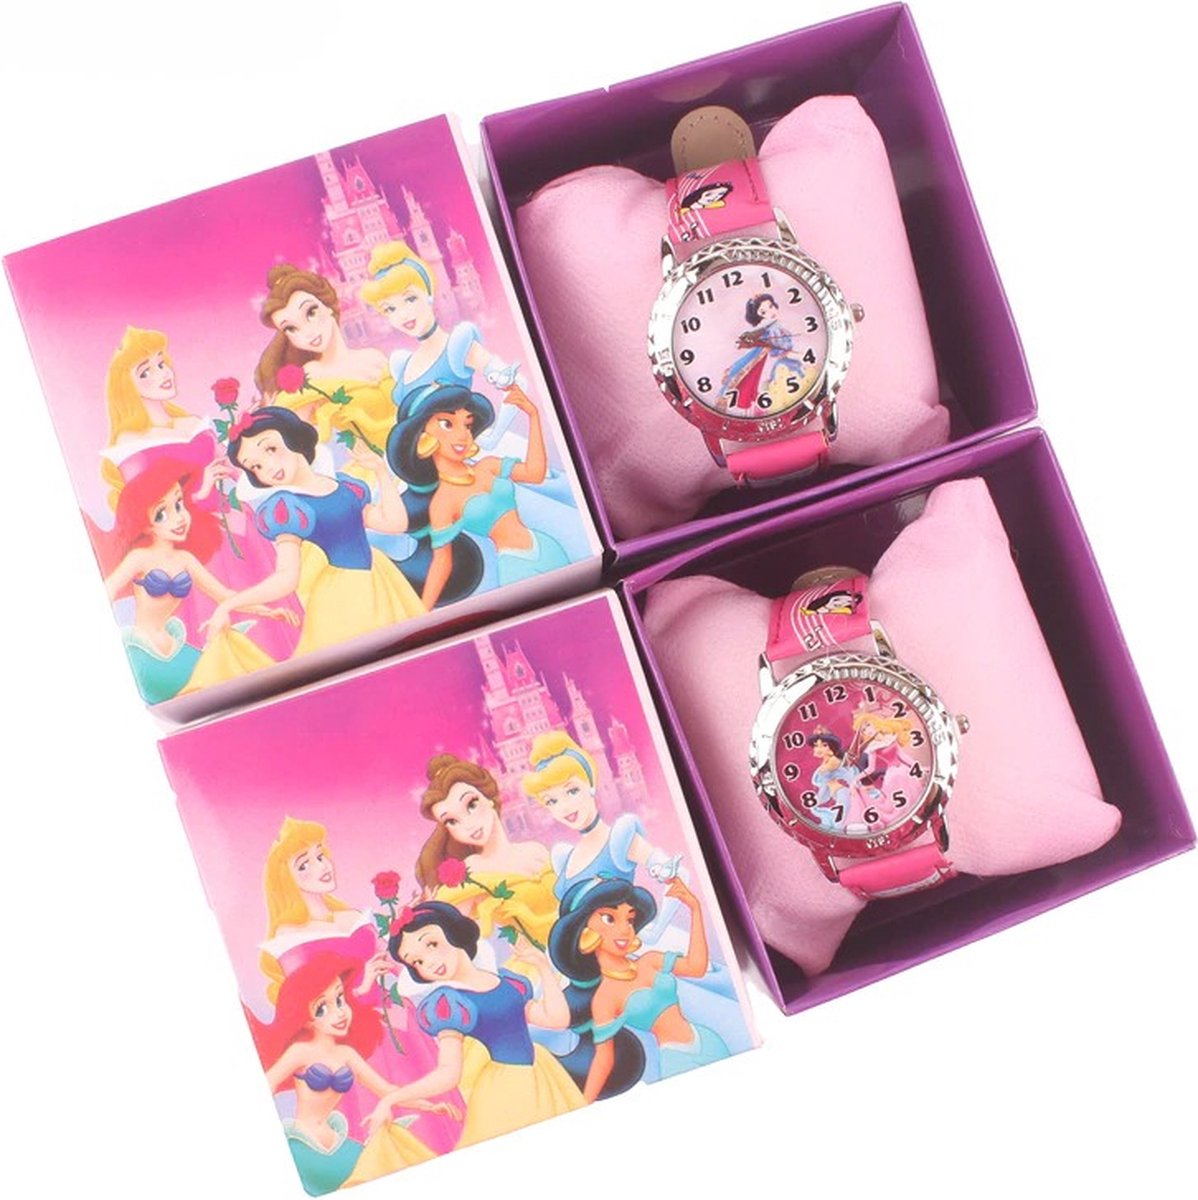 Disney Princess horloge - Kinderpolshorloge - Prachtig horloge met doos - Polshorloge - verjaardagscadeaus voor meisjes